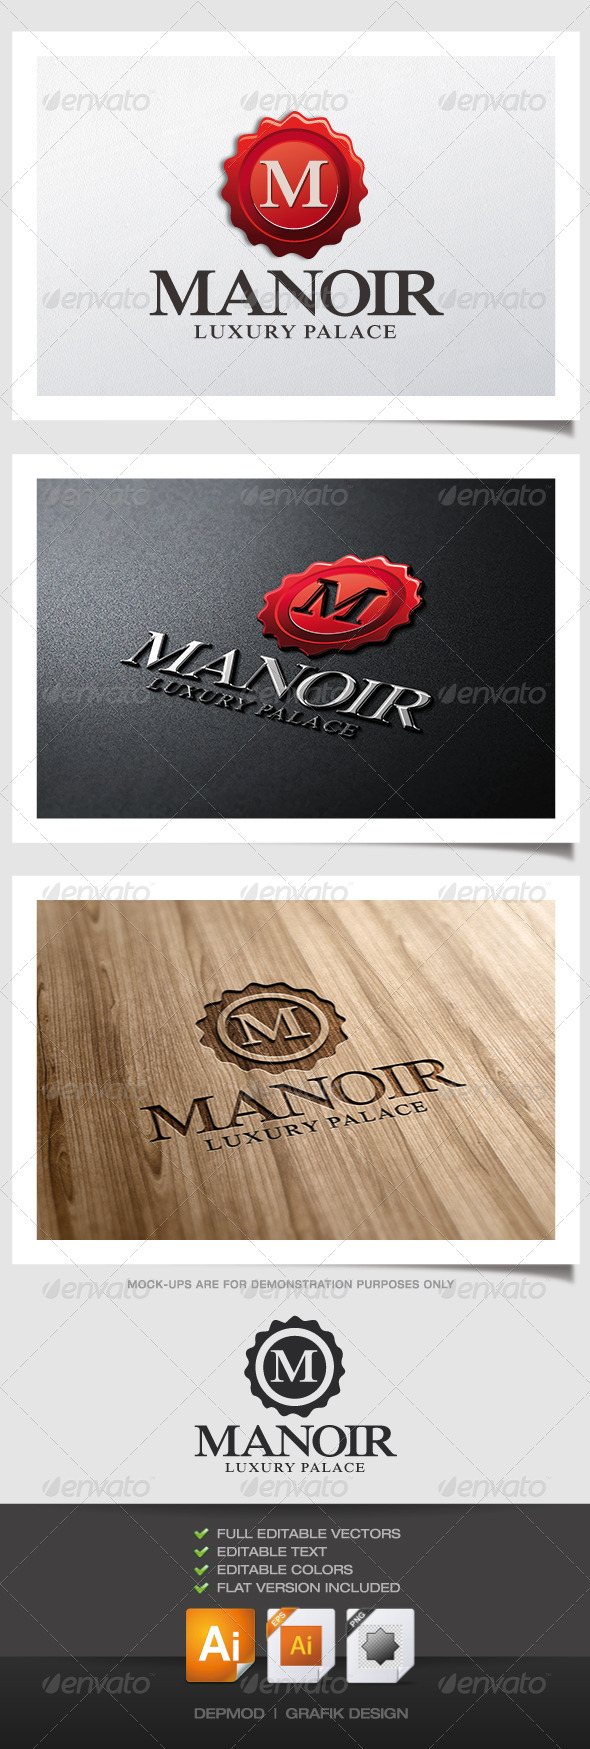 Manoir Logo